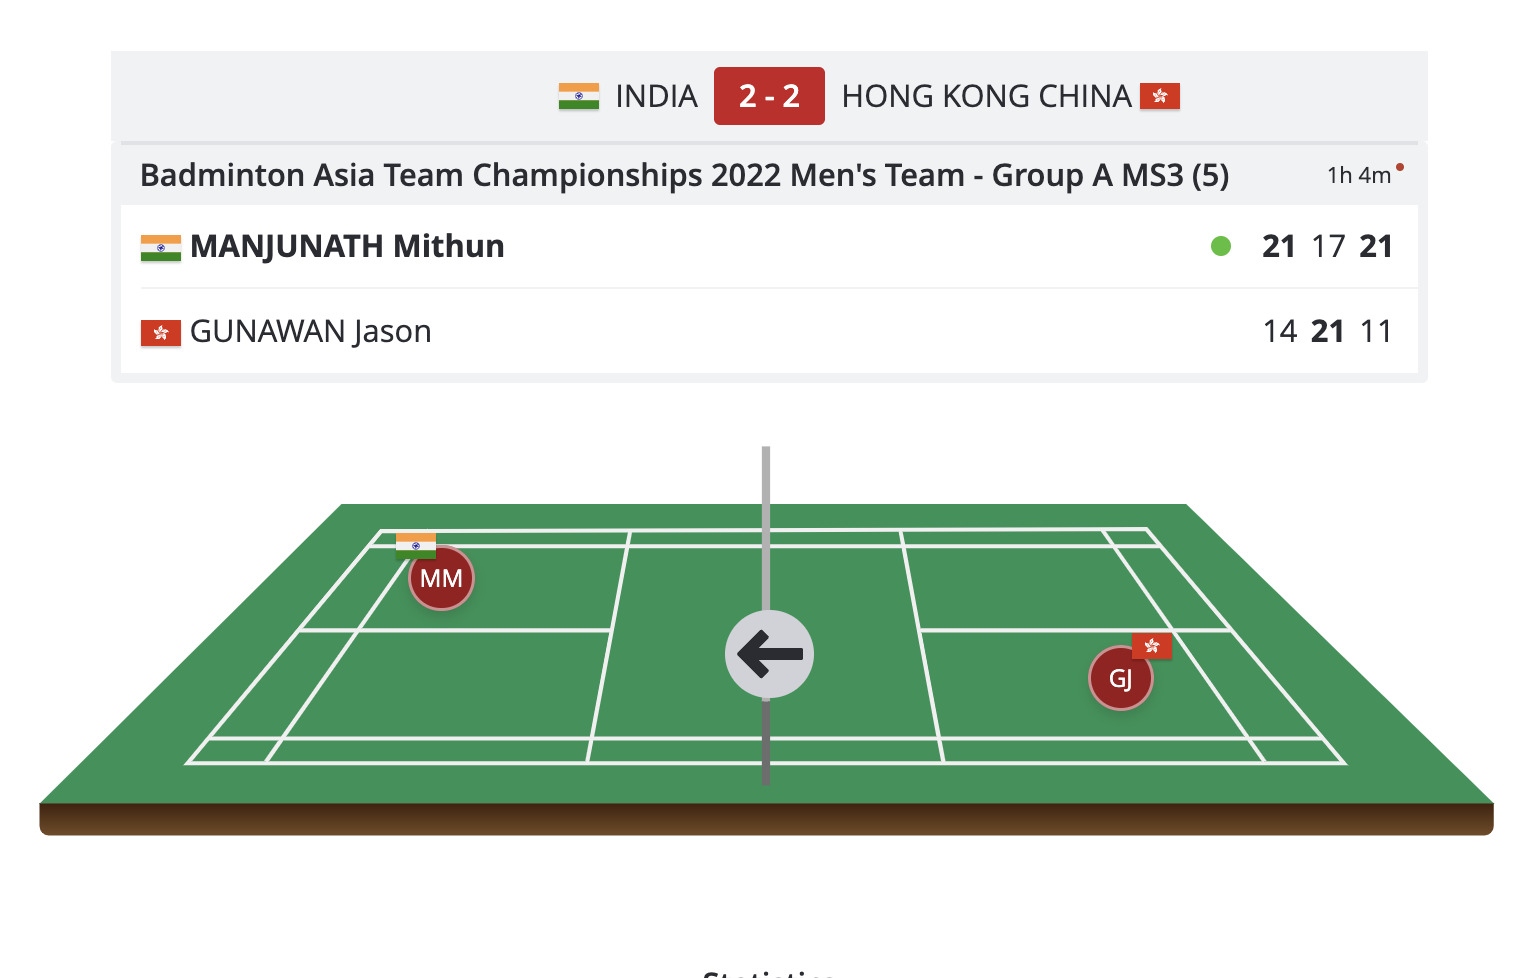 Badminton Asia Team Championships, Day 3 Indian Mens Team win 3-2 against Hong Kong China